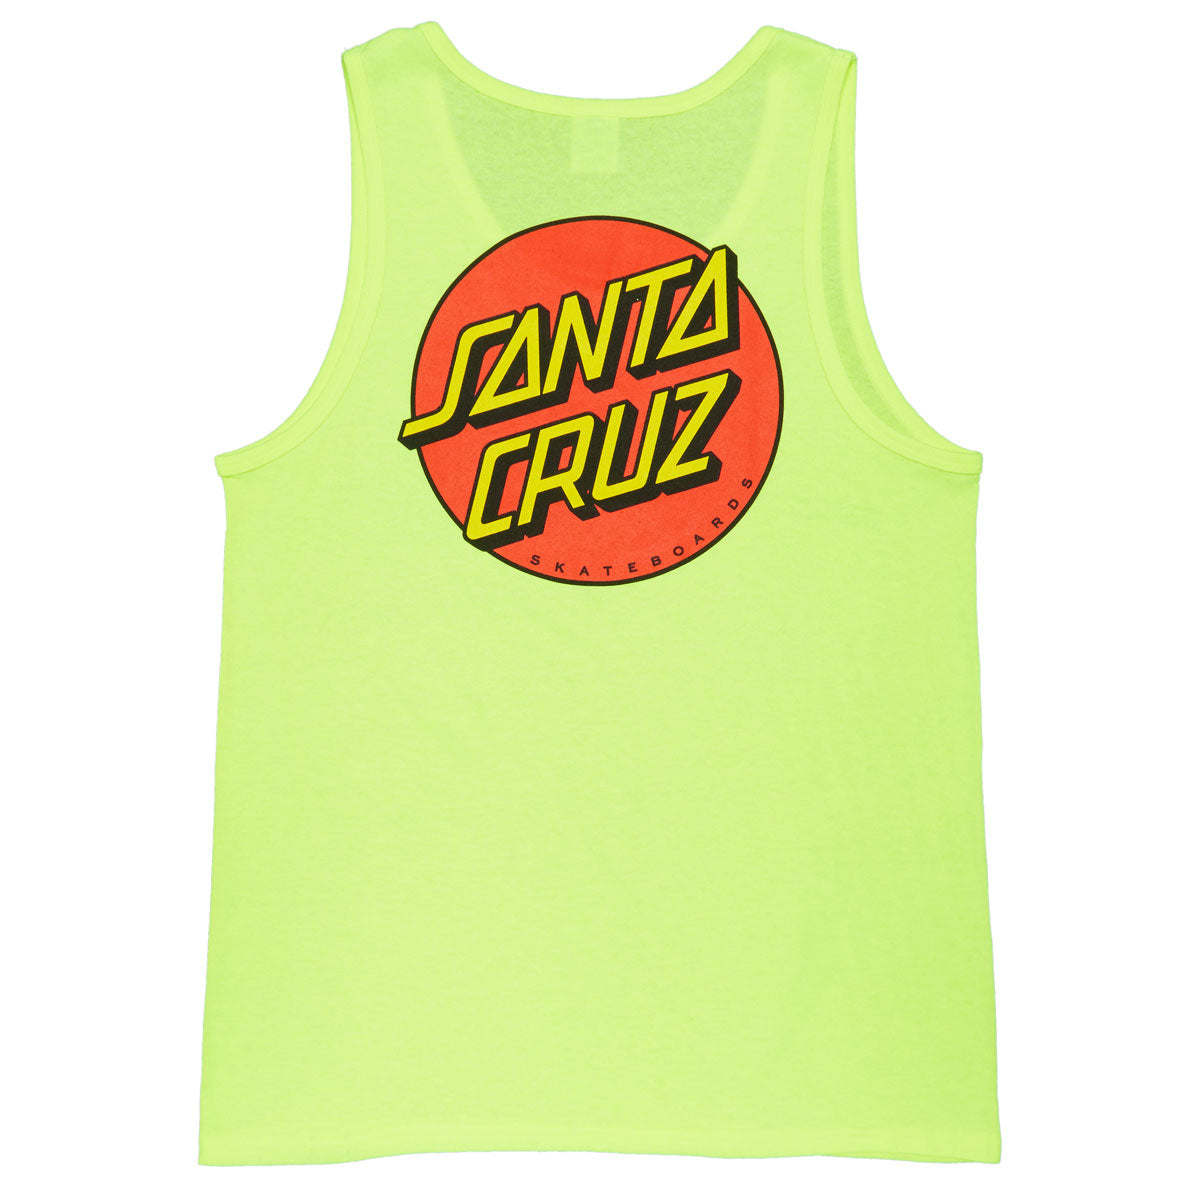 Santa Cruz Classic Dot Tank Top - Neon Yellow image 2